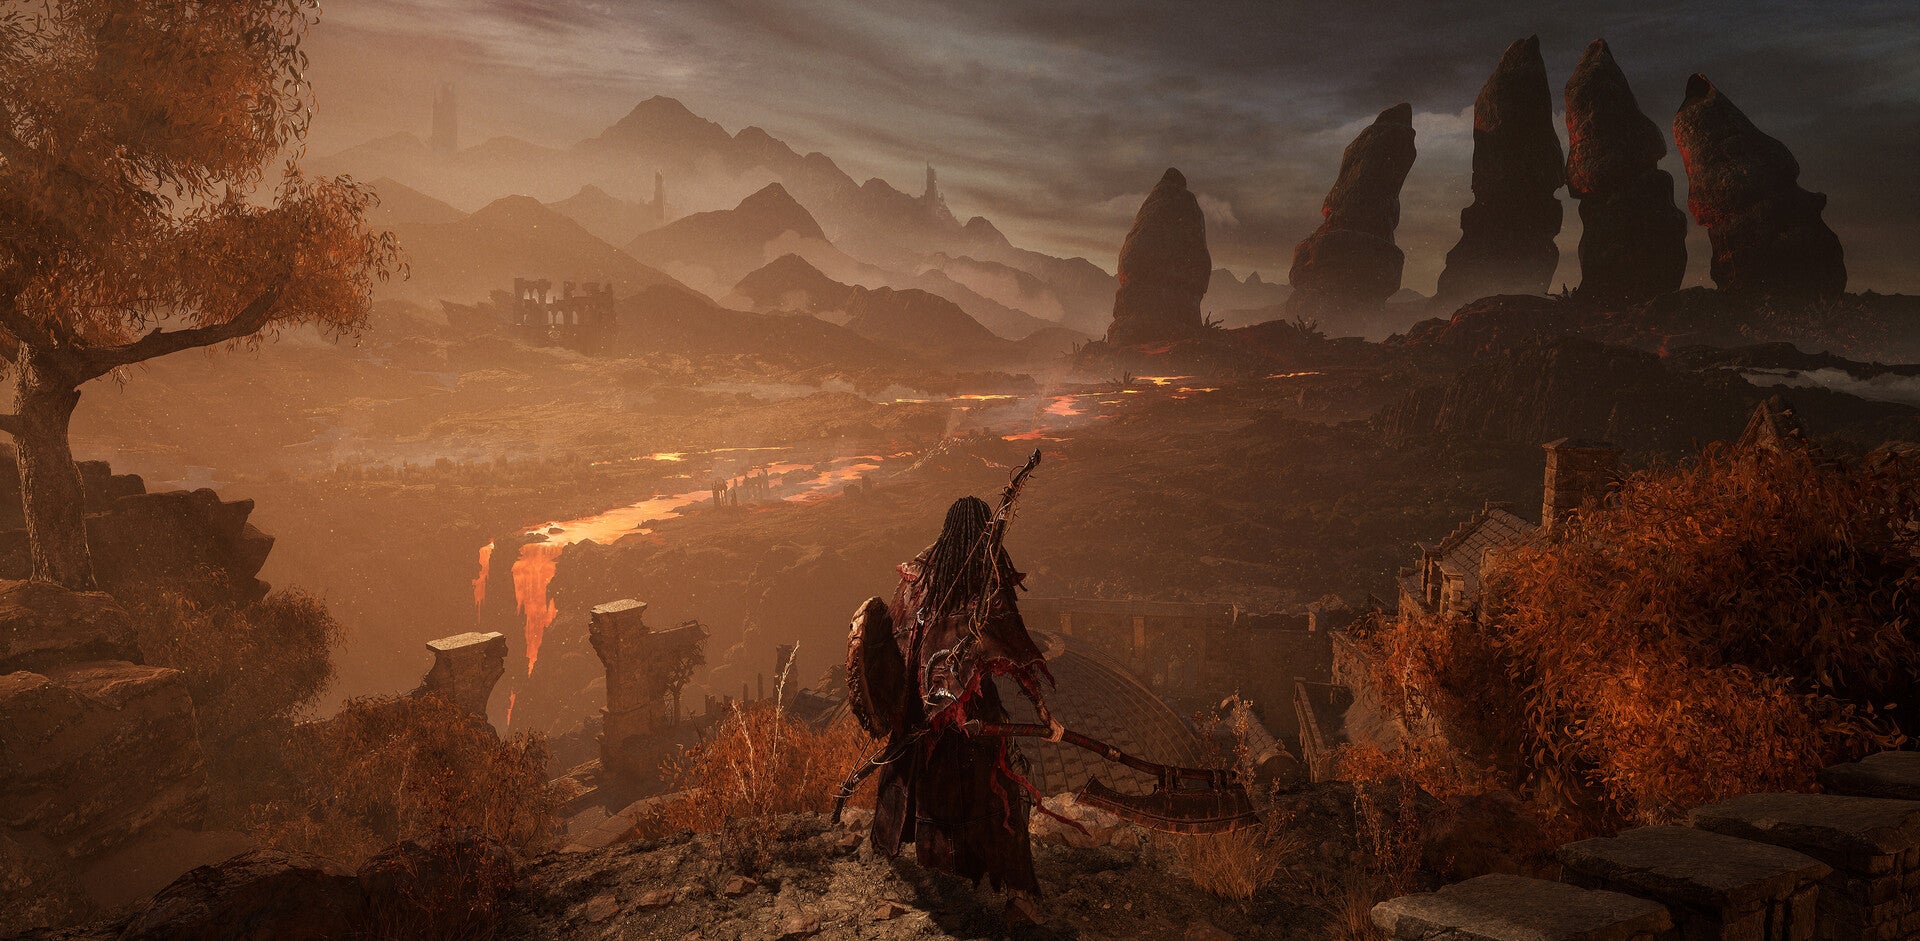 Pratinjau Lords of the Fallen - pemain melihat ke dunia luas lava cair dan bebatuan merah-coklat